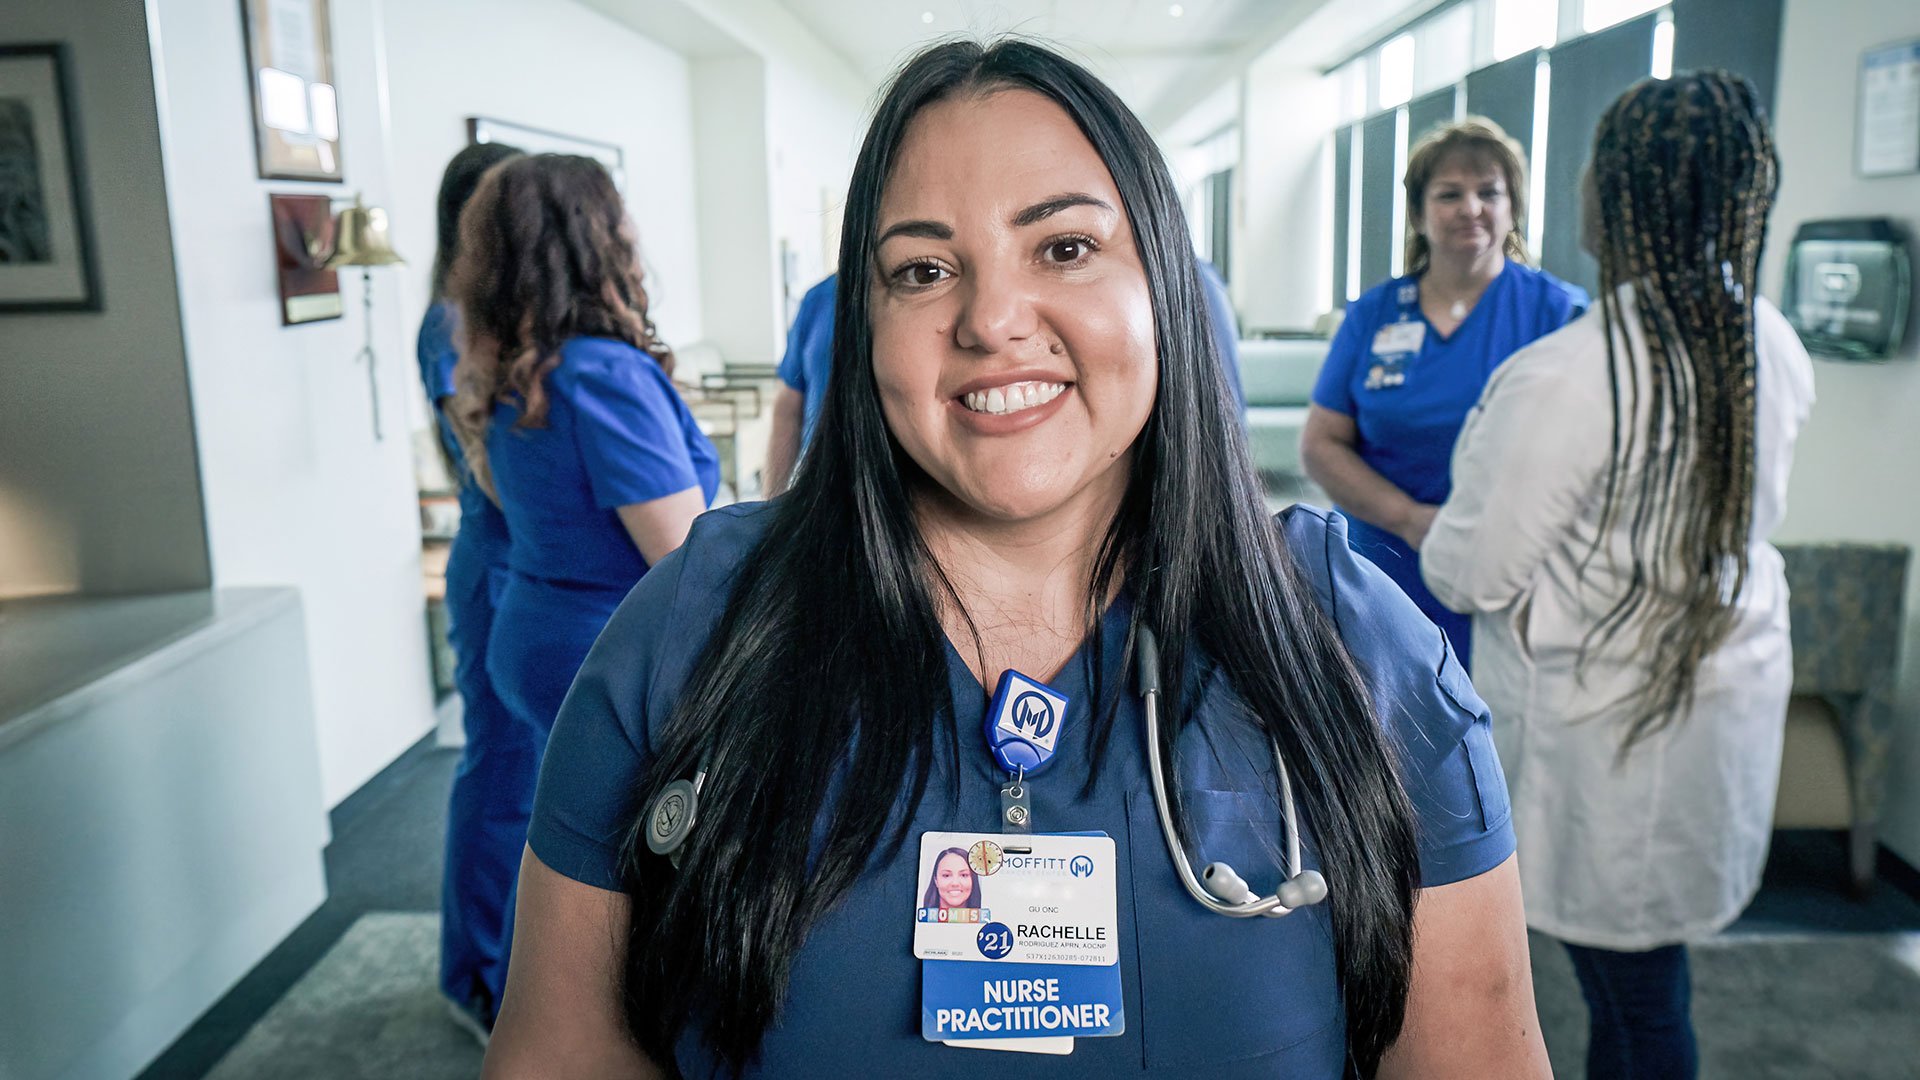 Nurse practitioner at Moffitt, just one type of Florida nursing job.